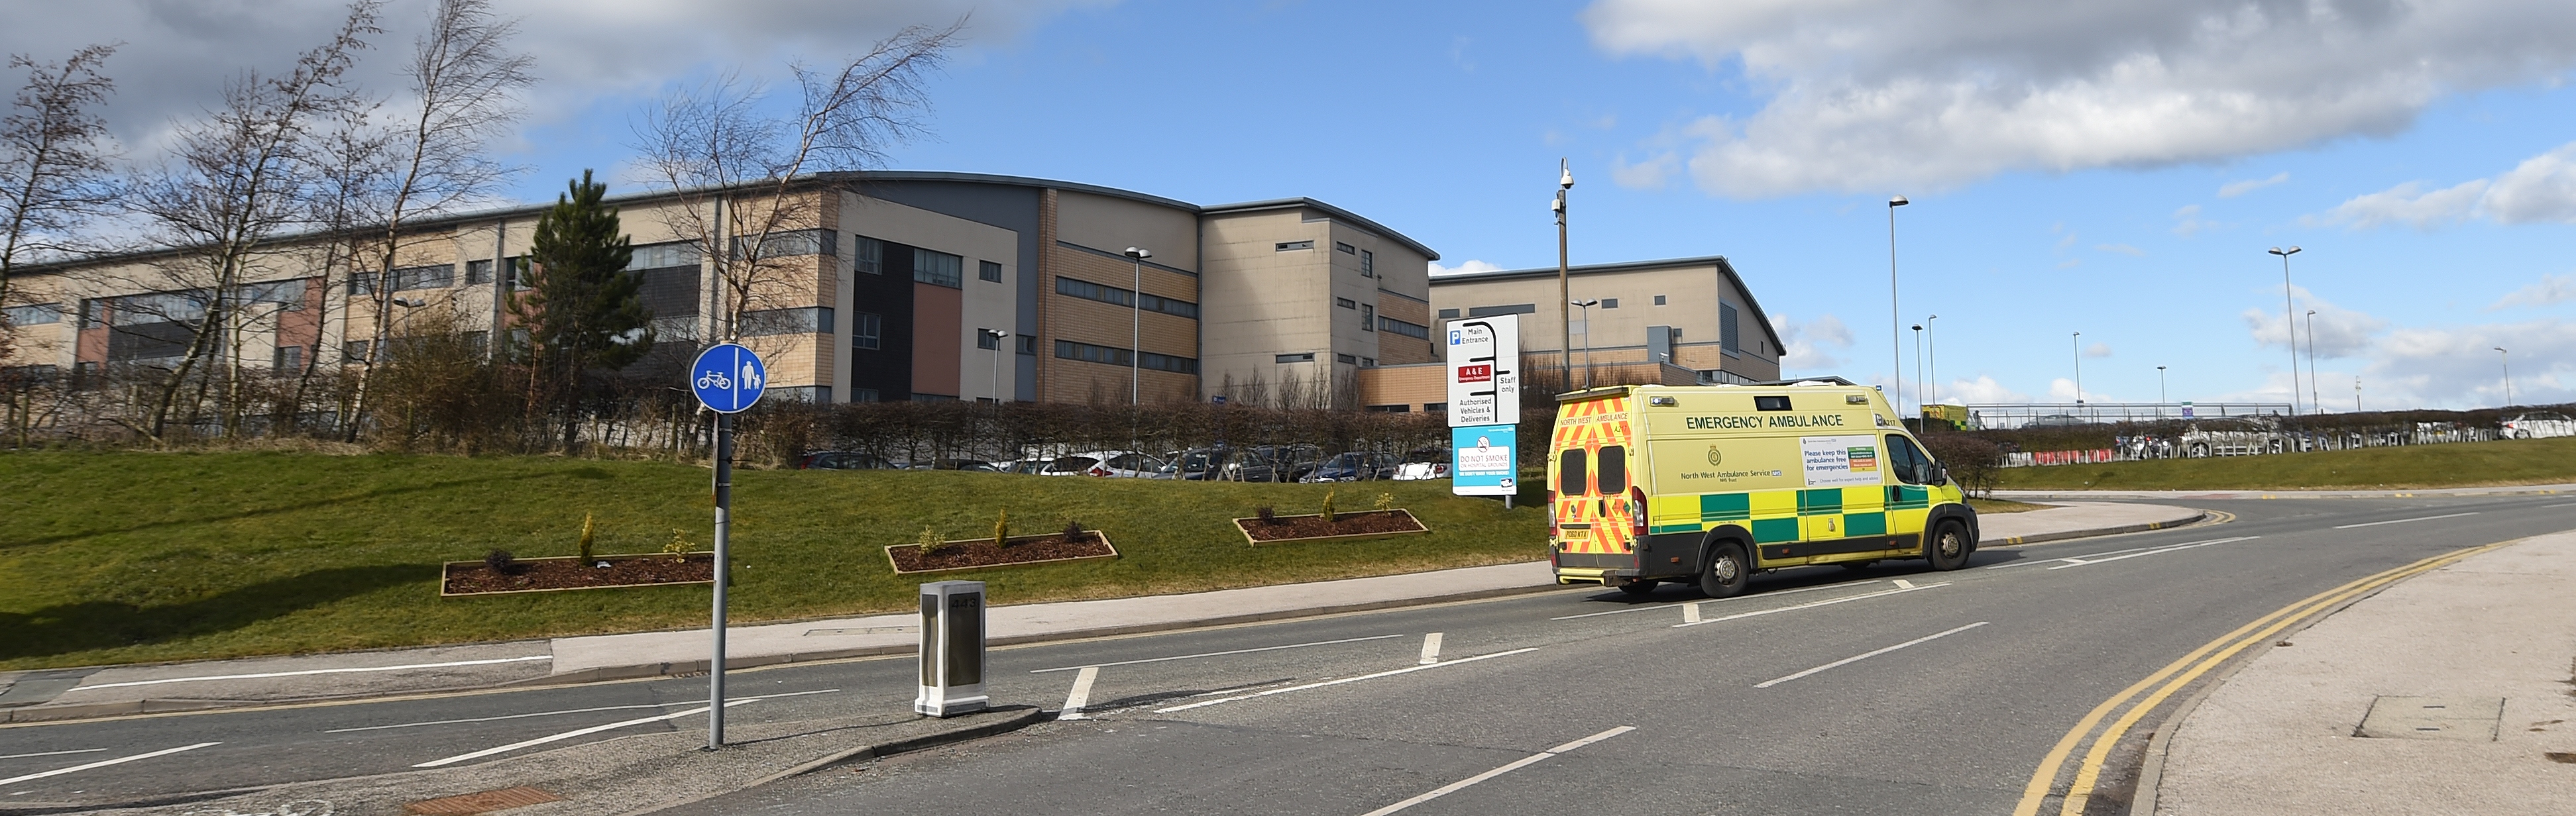 Ambulance driving past Royal Blackburn Teaching Hospital